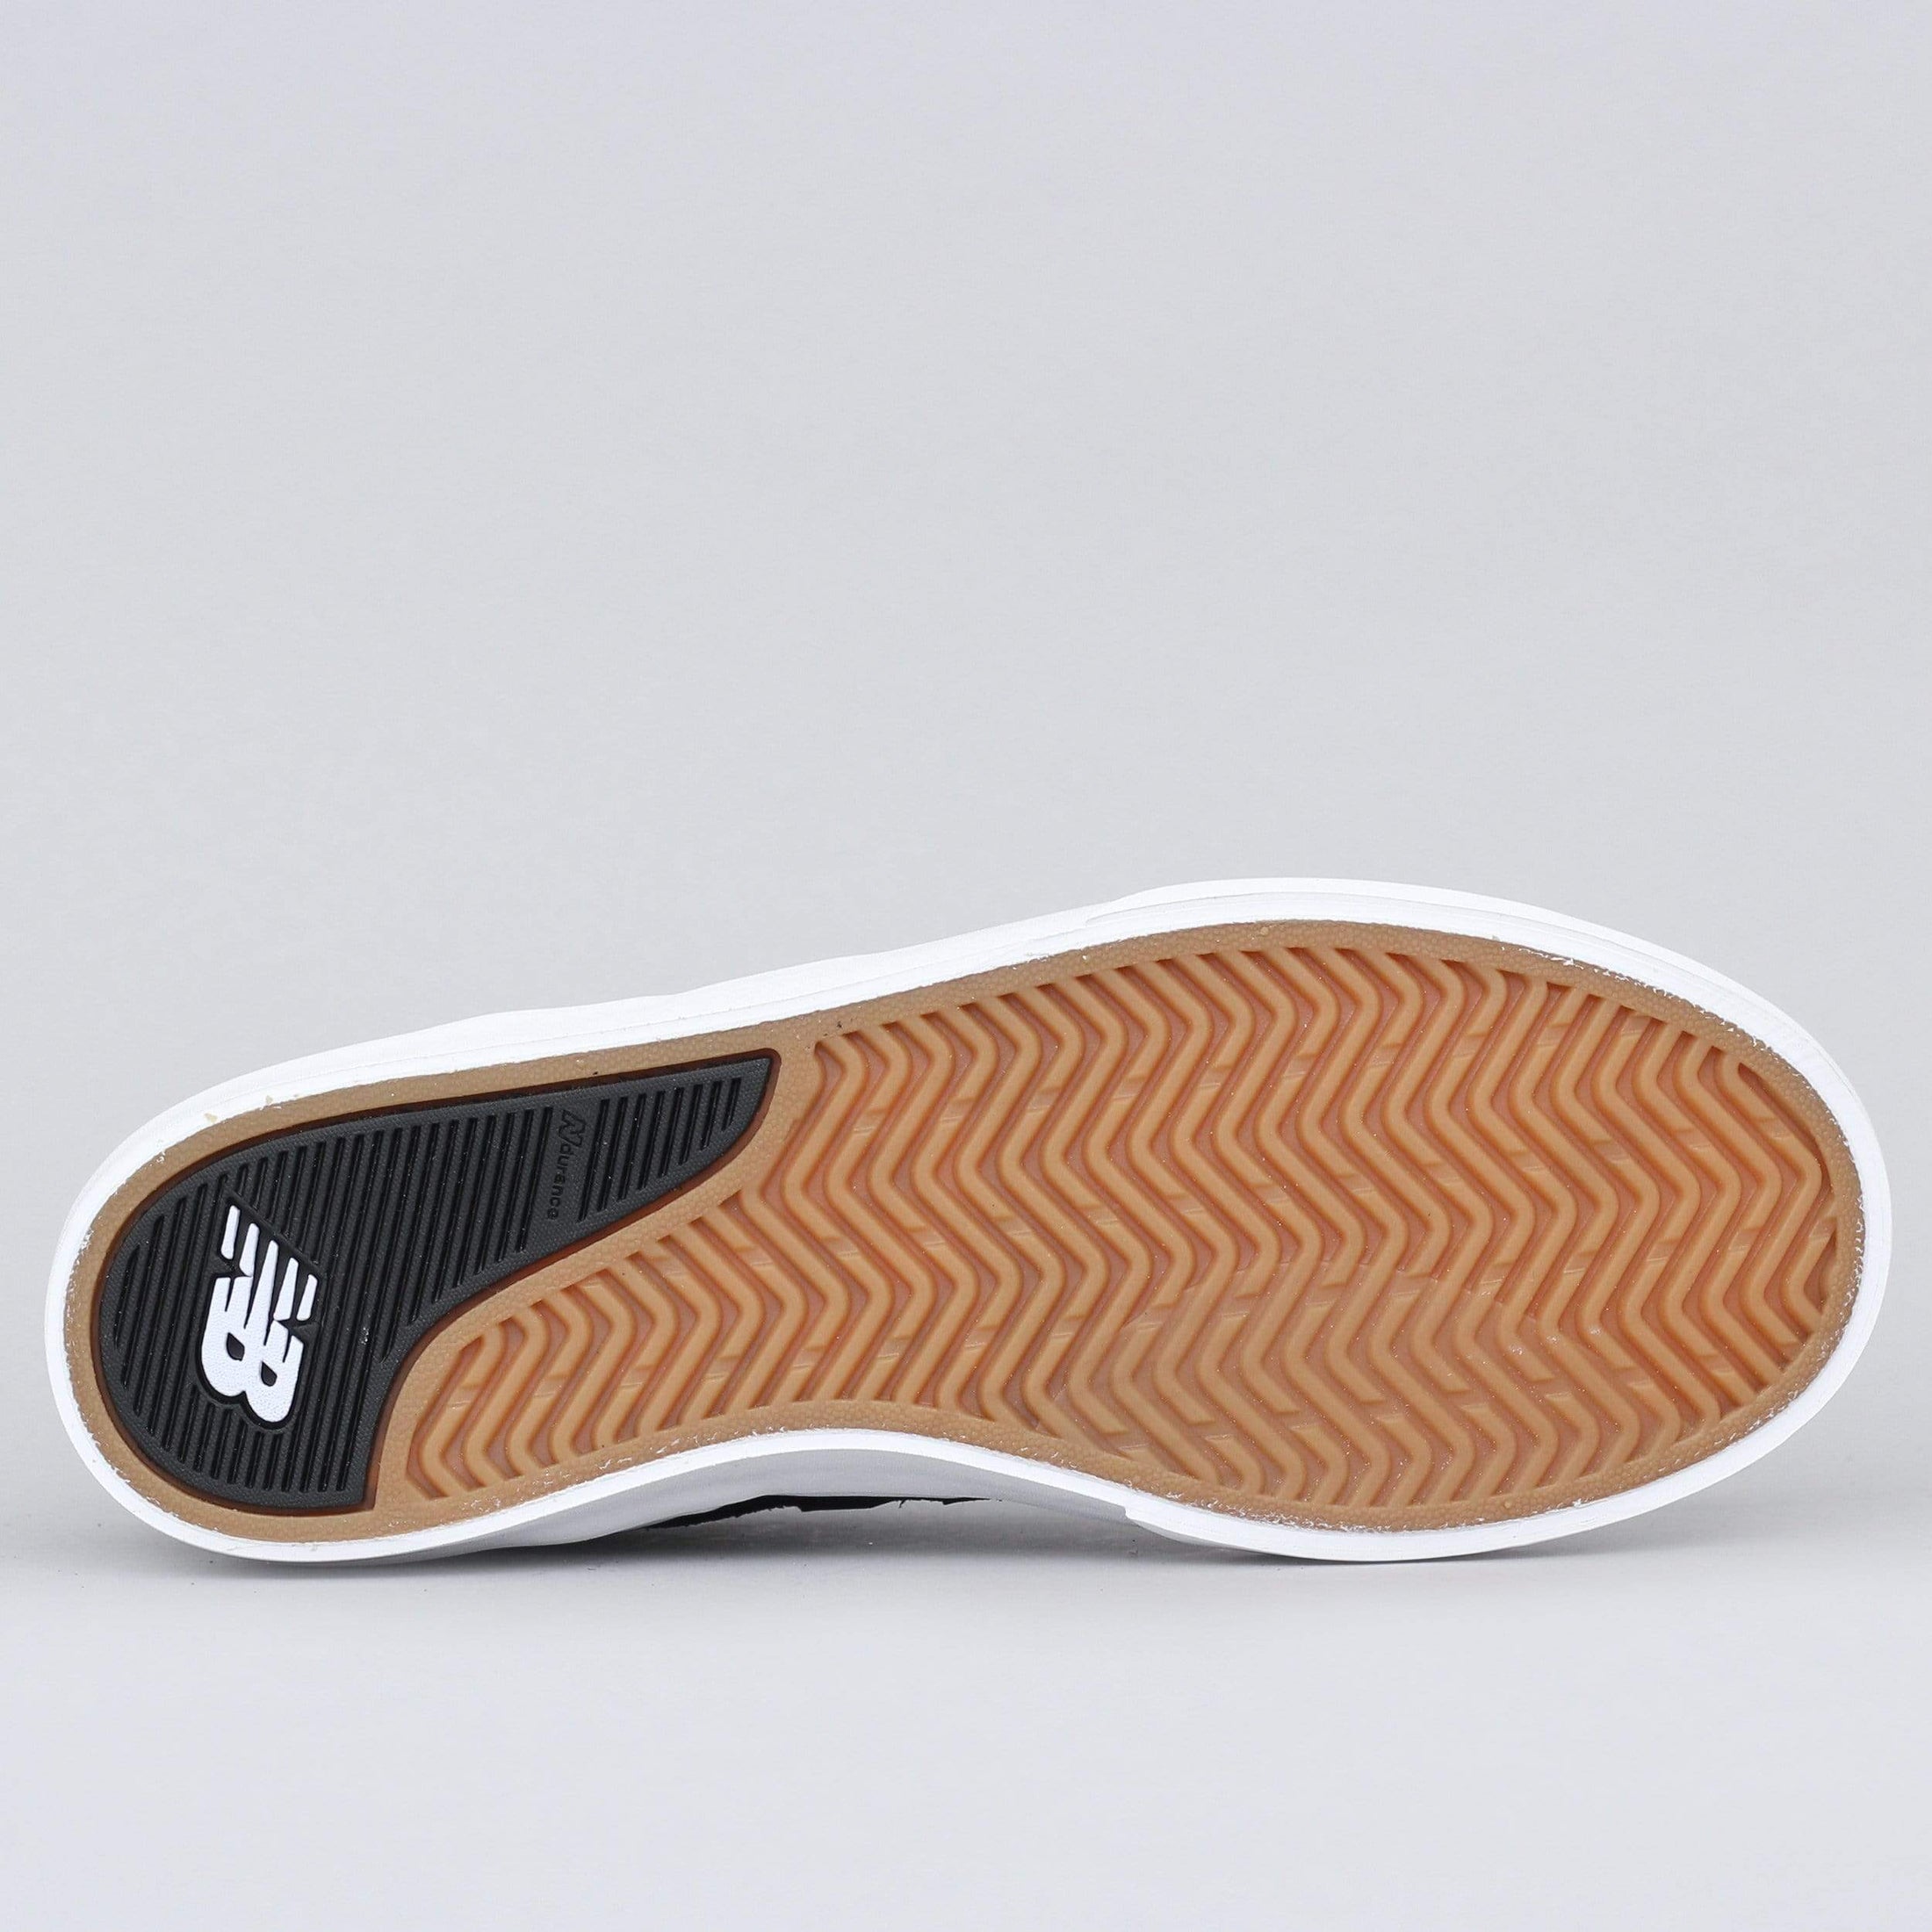 New Balance 379 Shoes Black / White